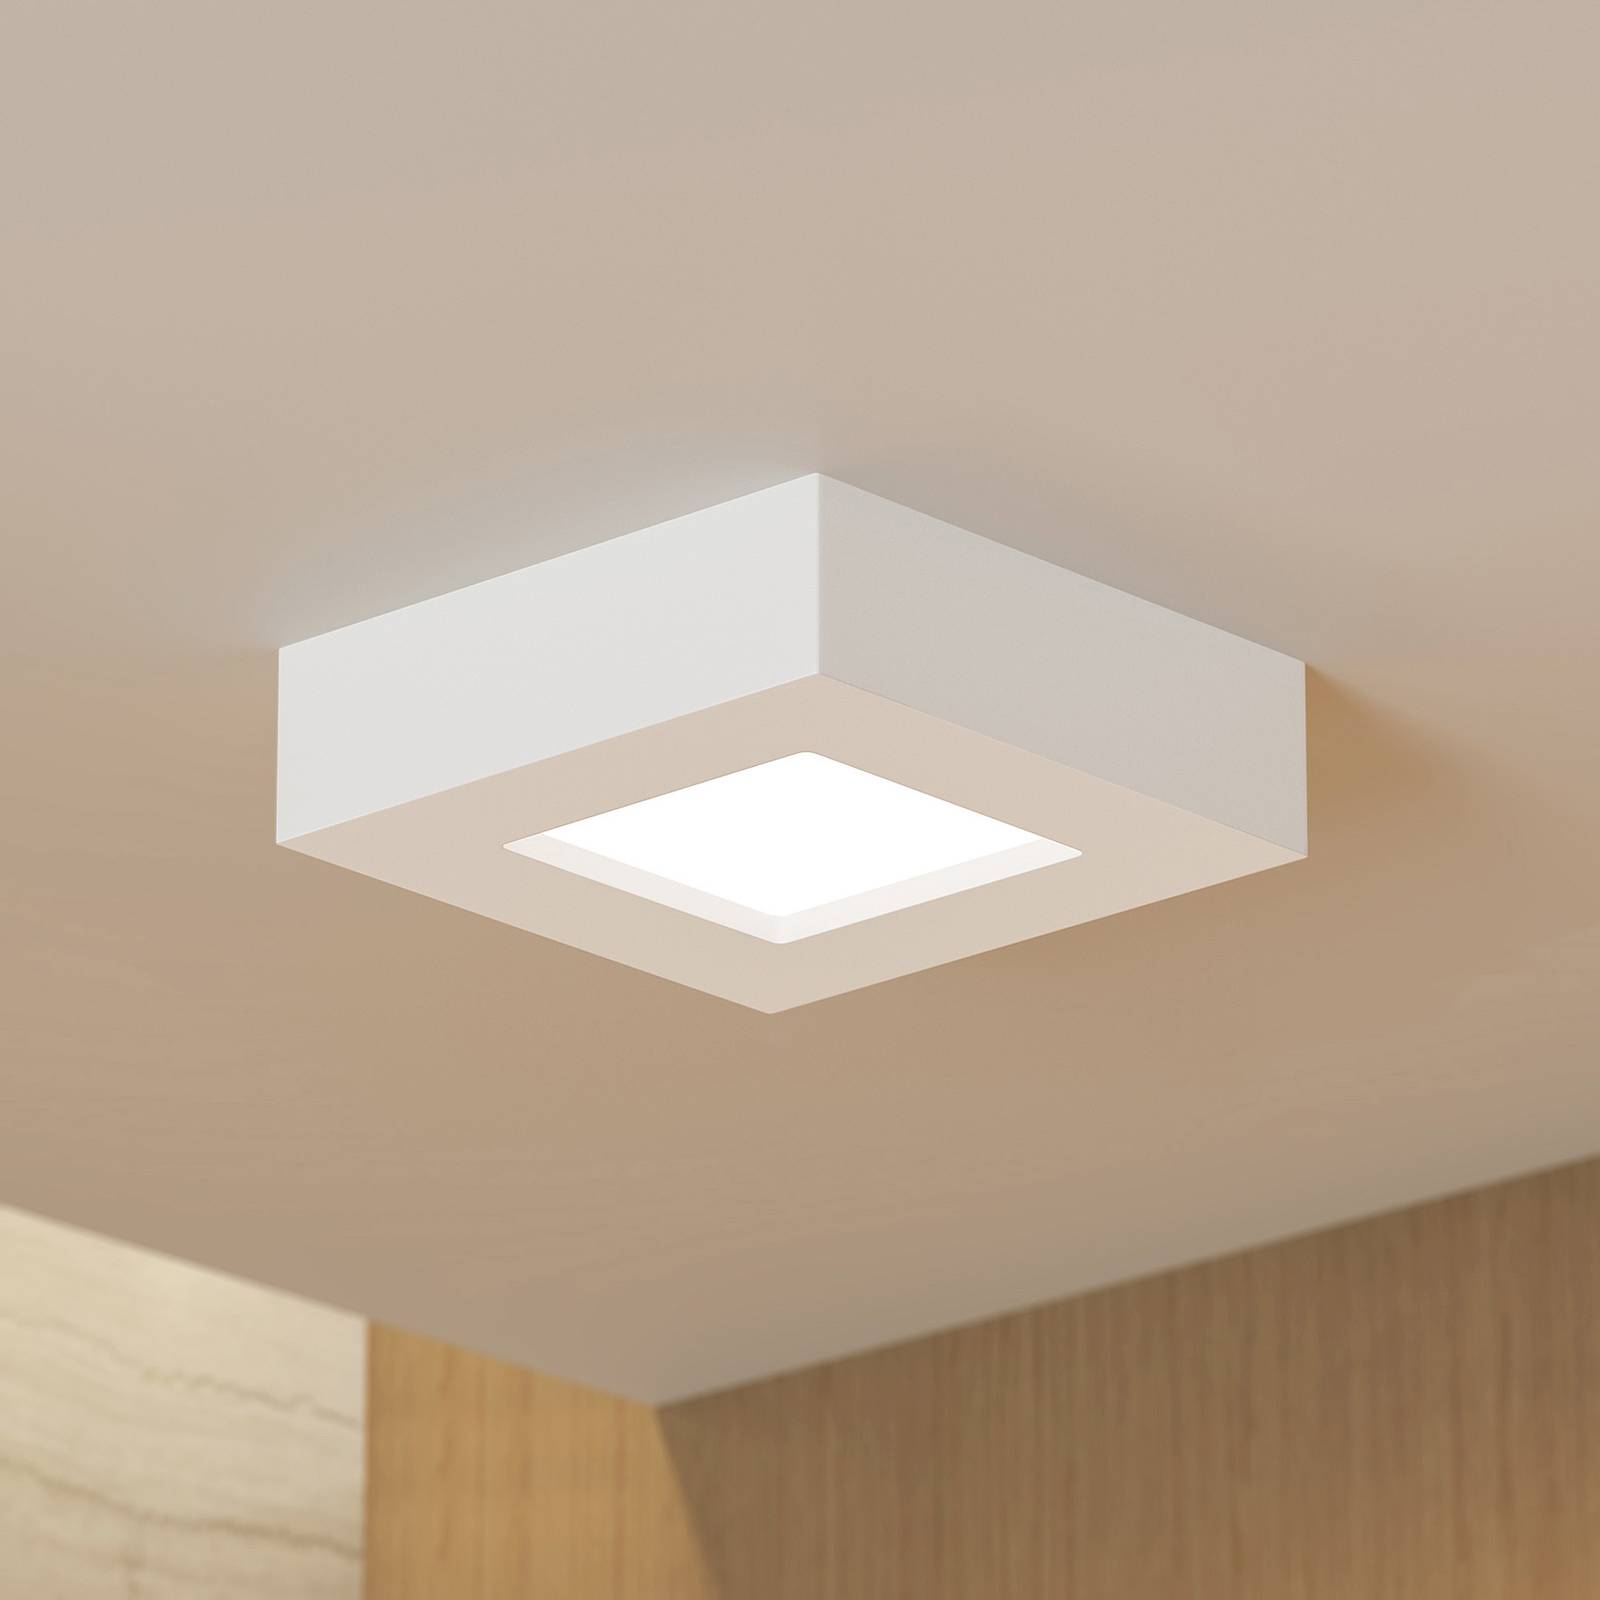 Image of Prios Alette plafonnier LED, blanc, 12,2 cm 4251911707632